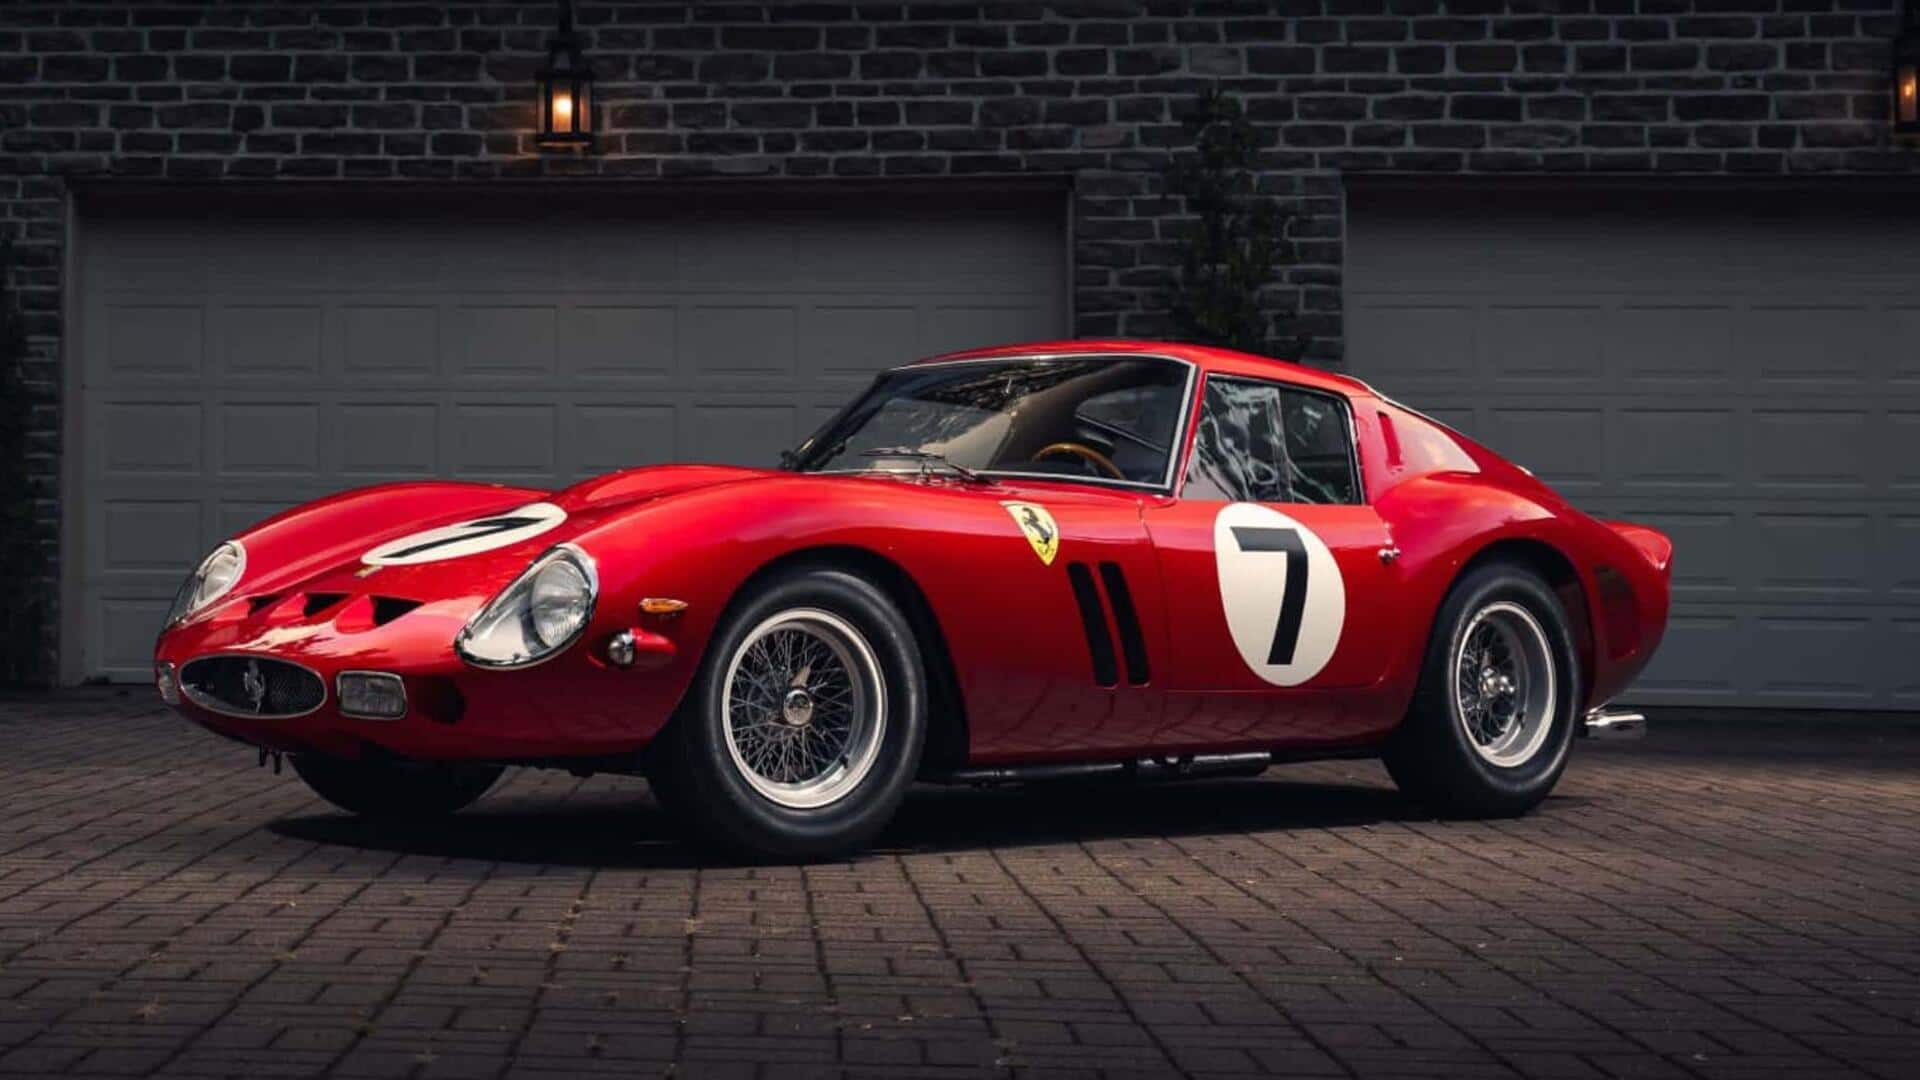 1962 Ferrari GTO sells for record $51.7 million at auction